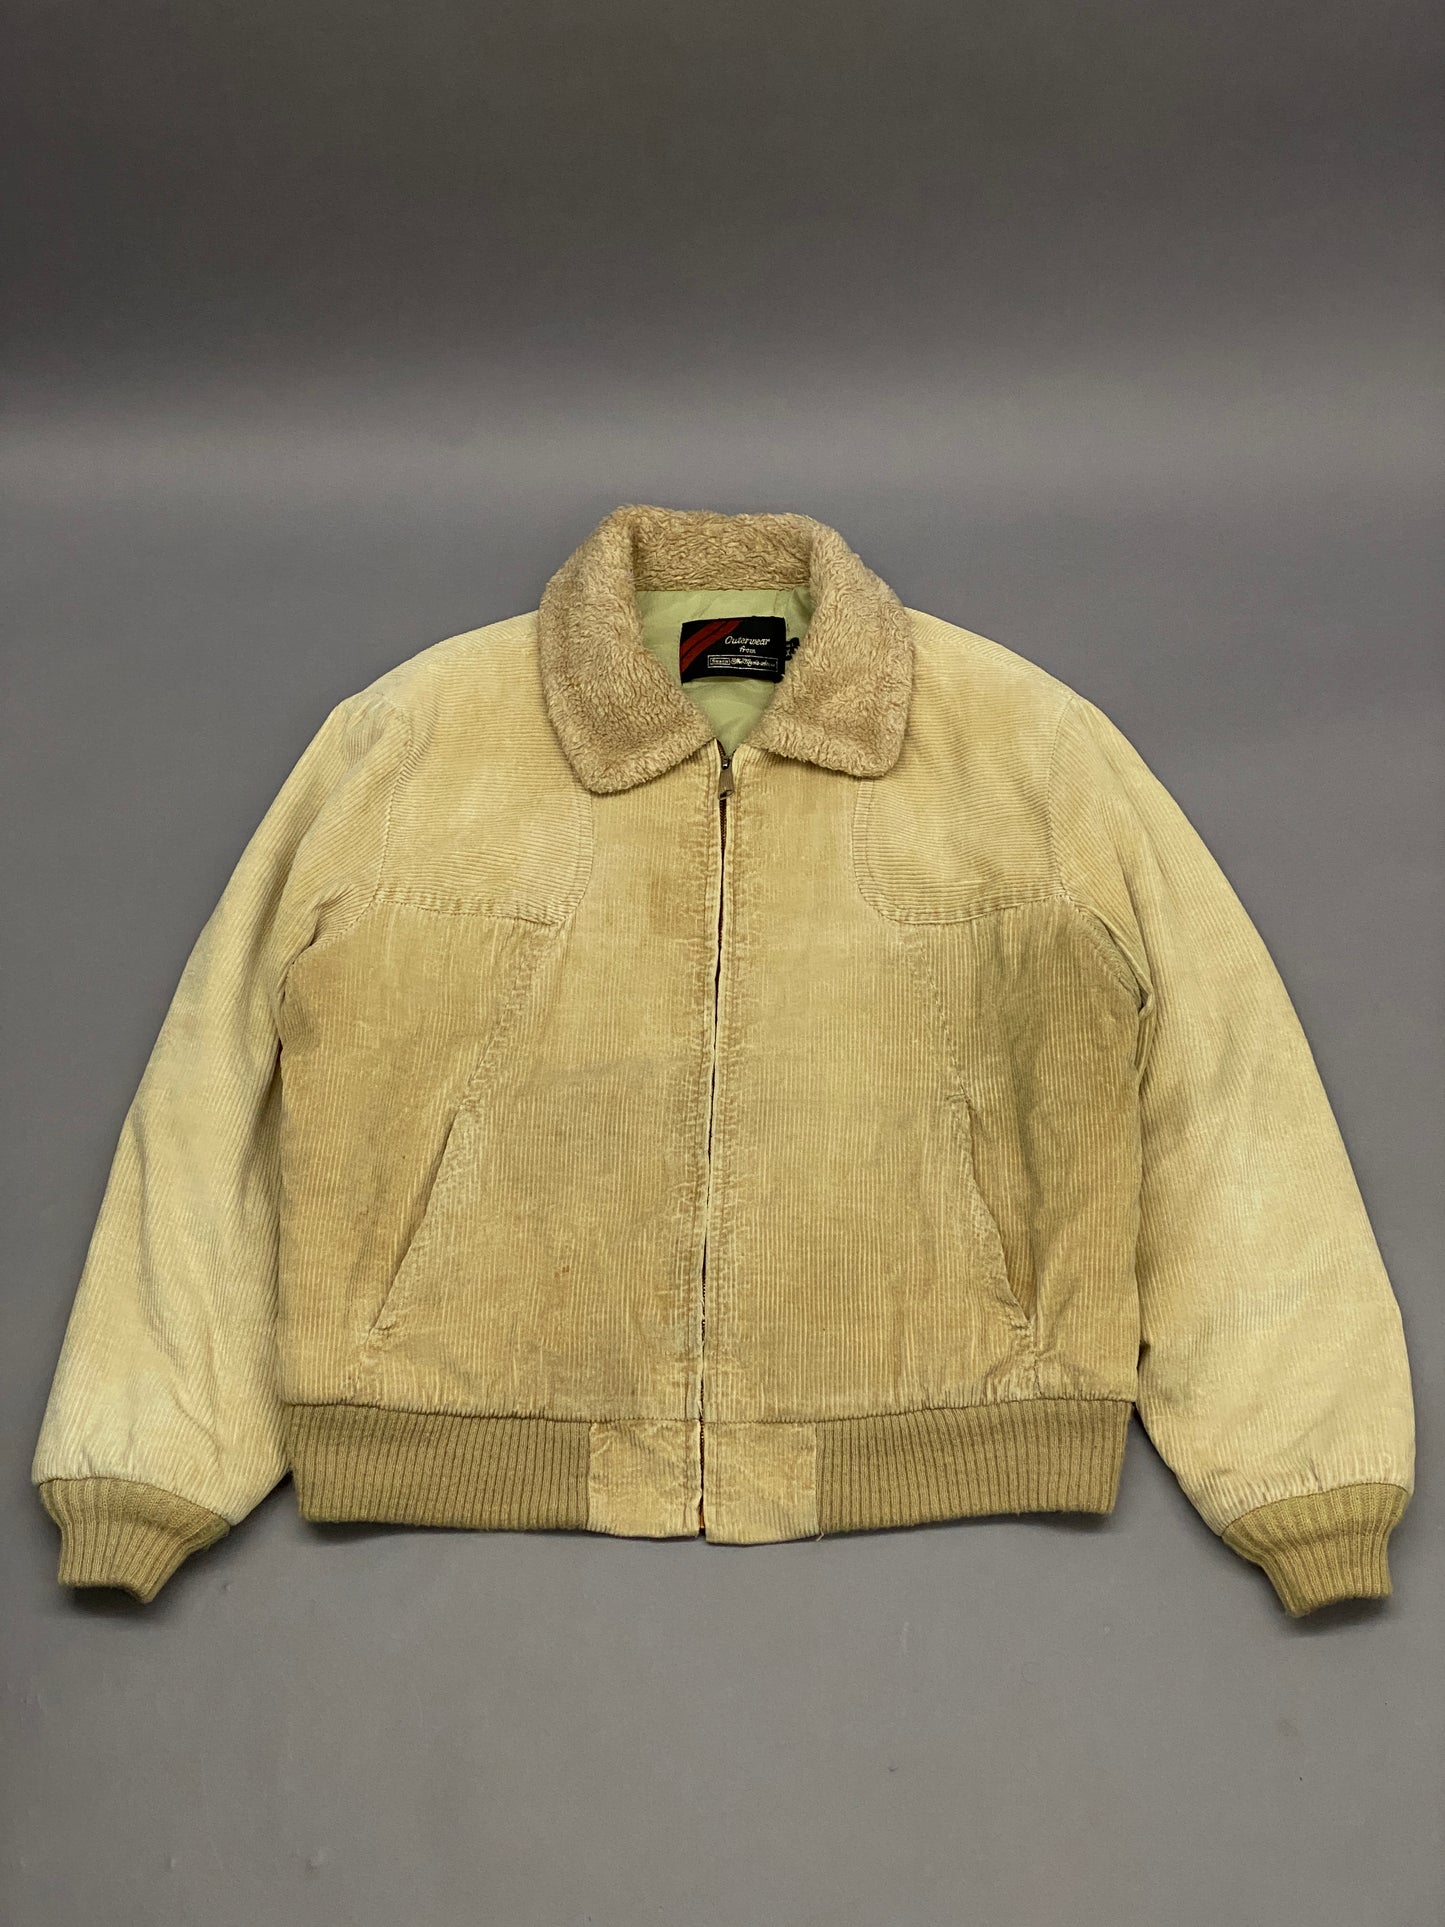 Sears Corduroy 70's Sherpa Jacket